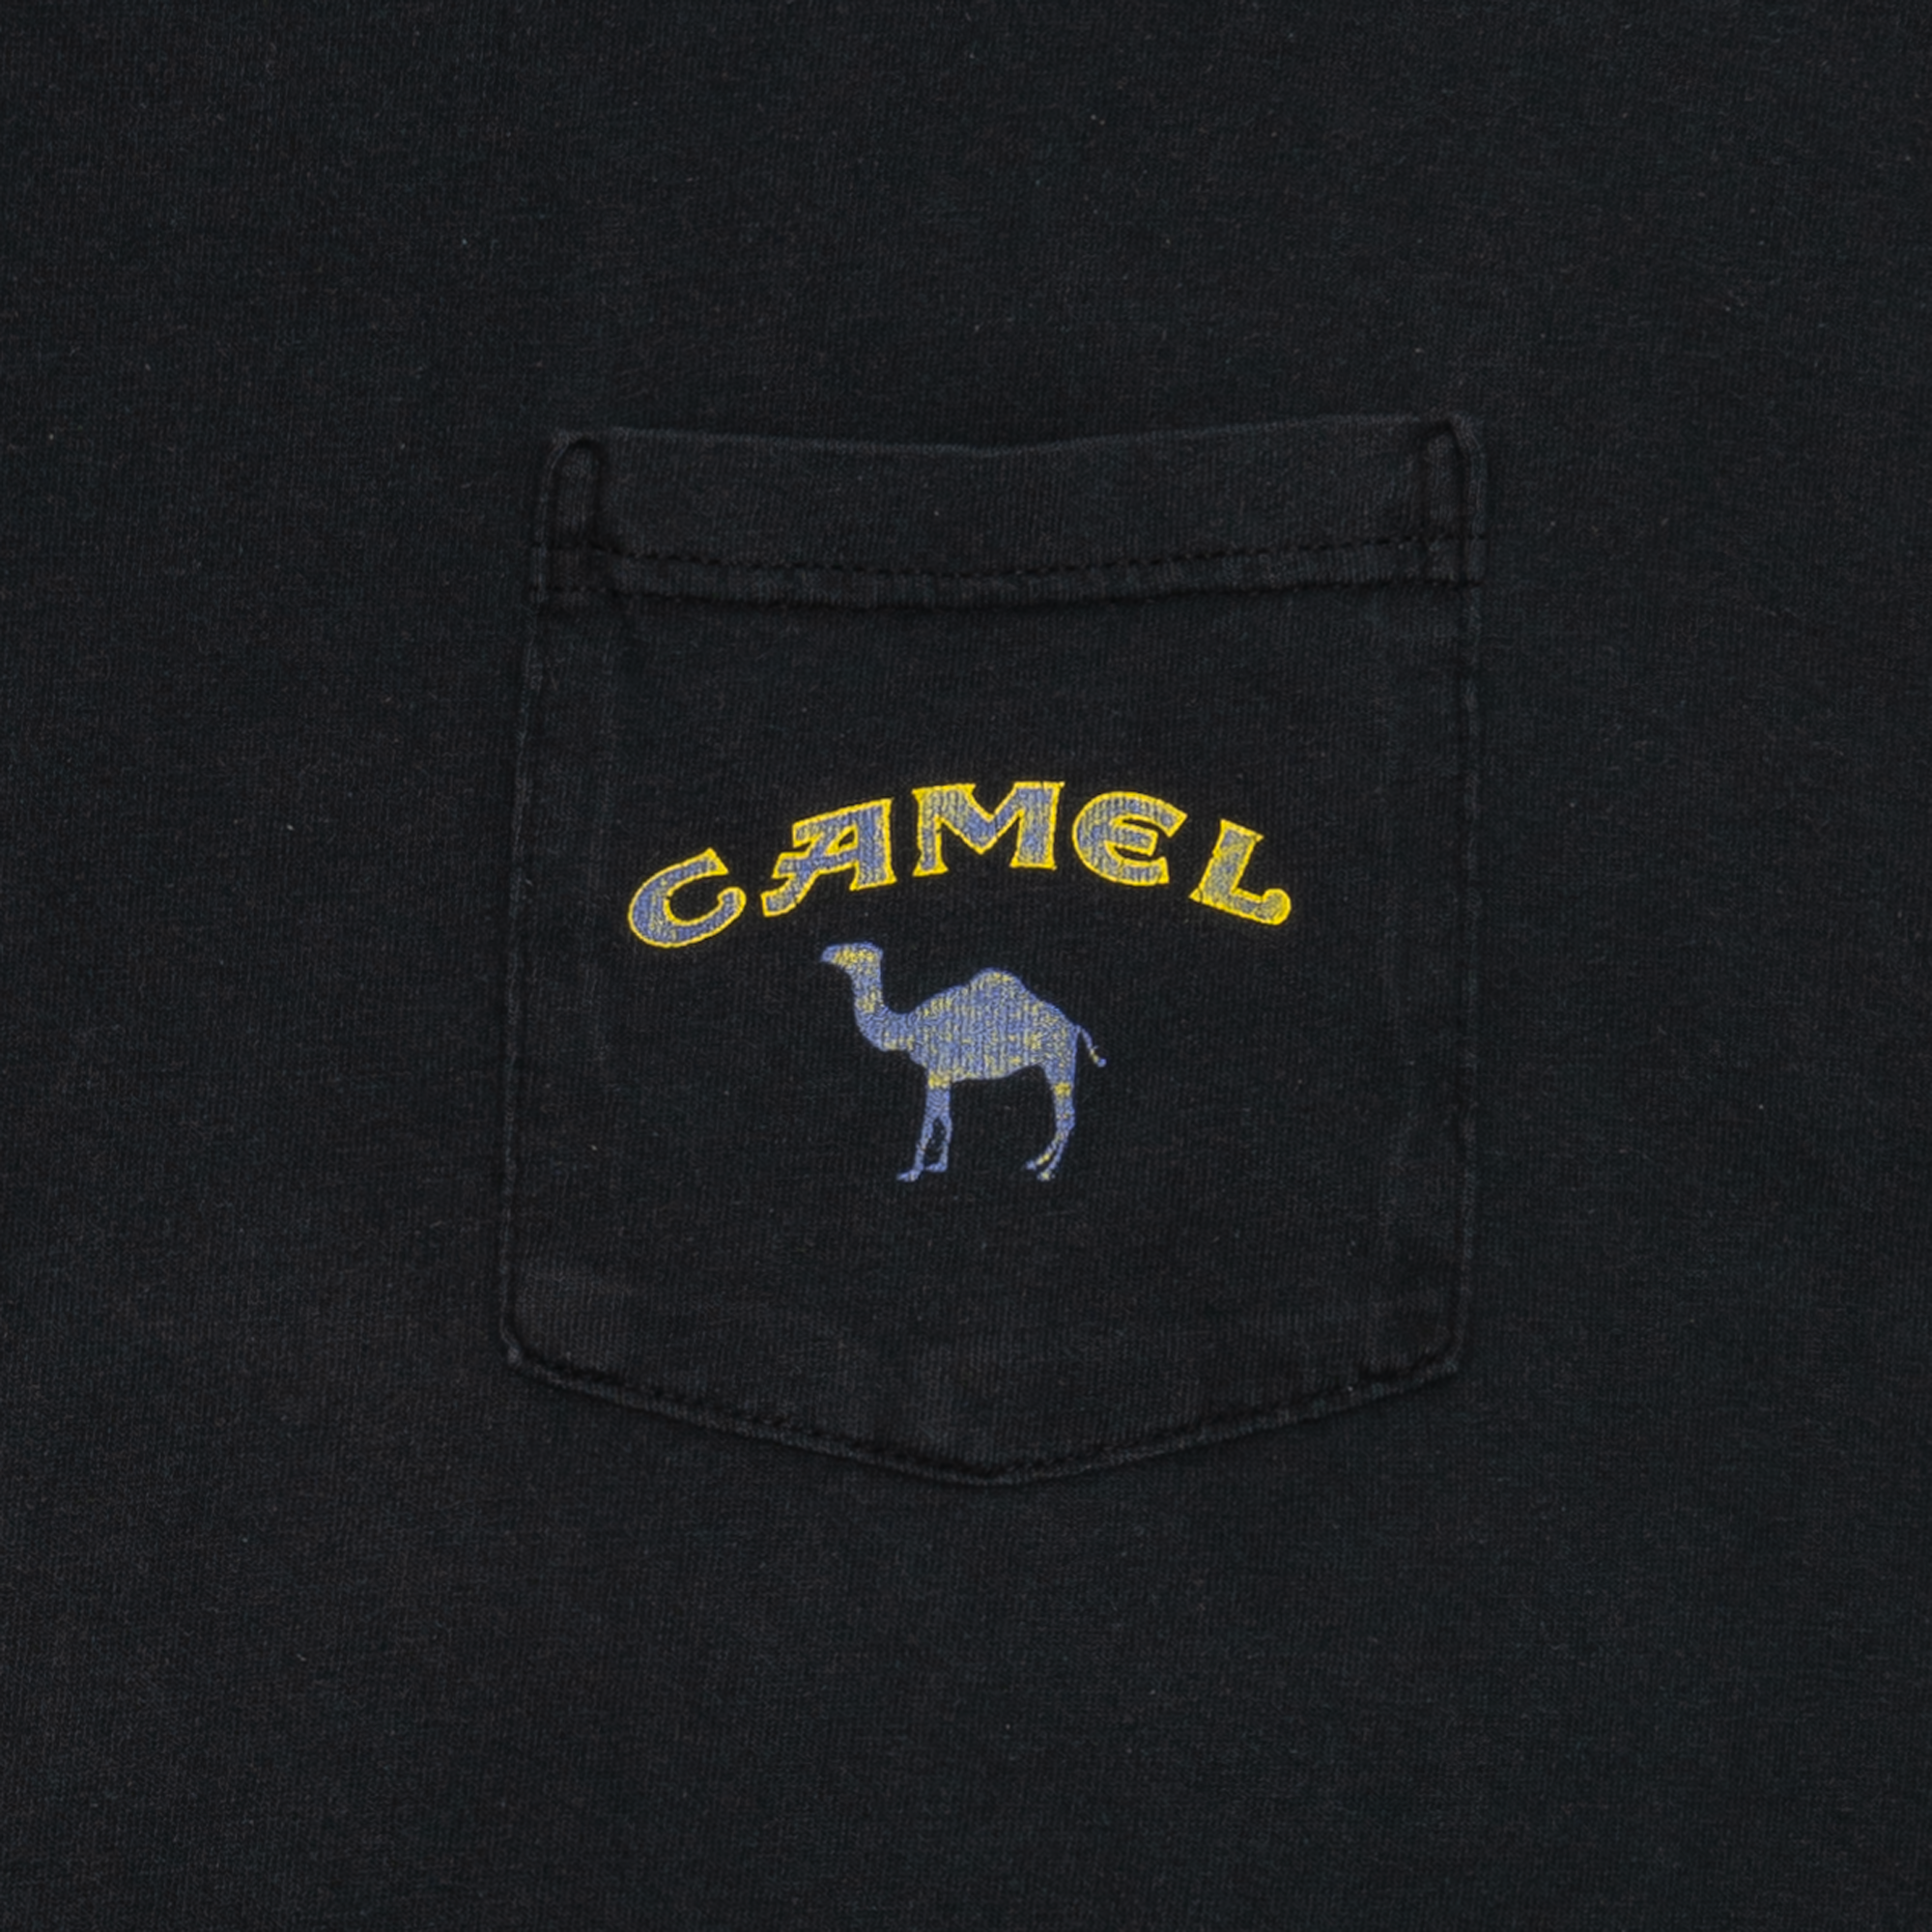 Camel Cigarettes "Joe's Place" Pocket Tee Black-PLUS